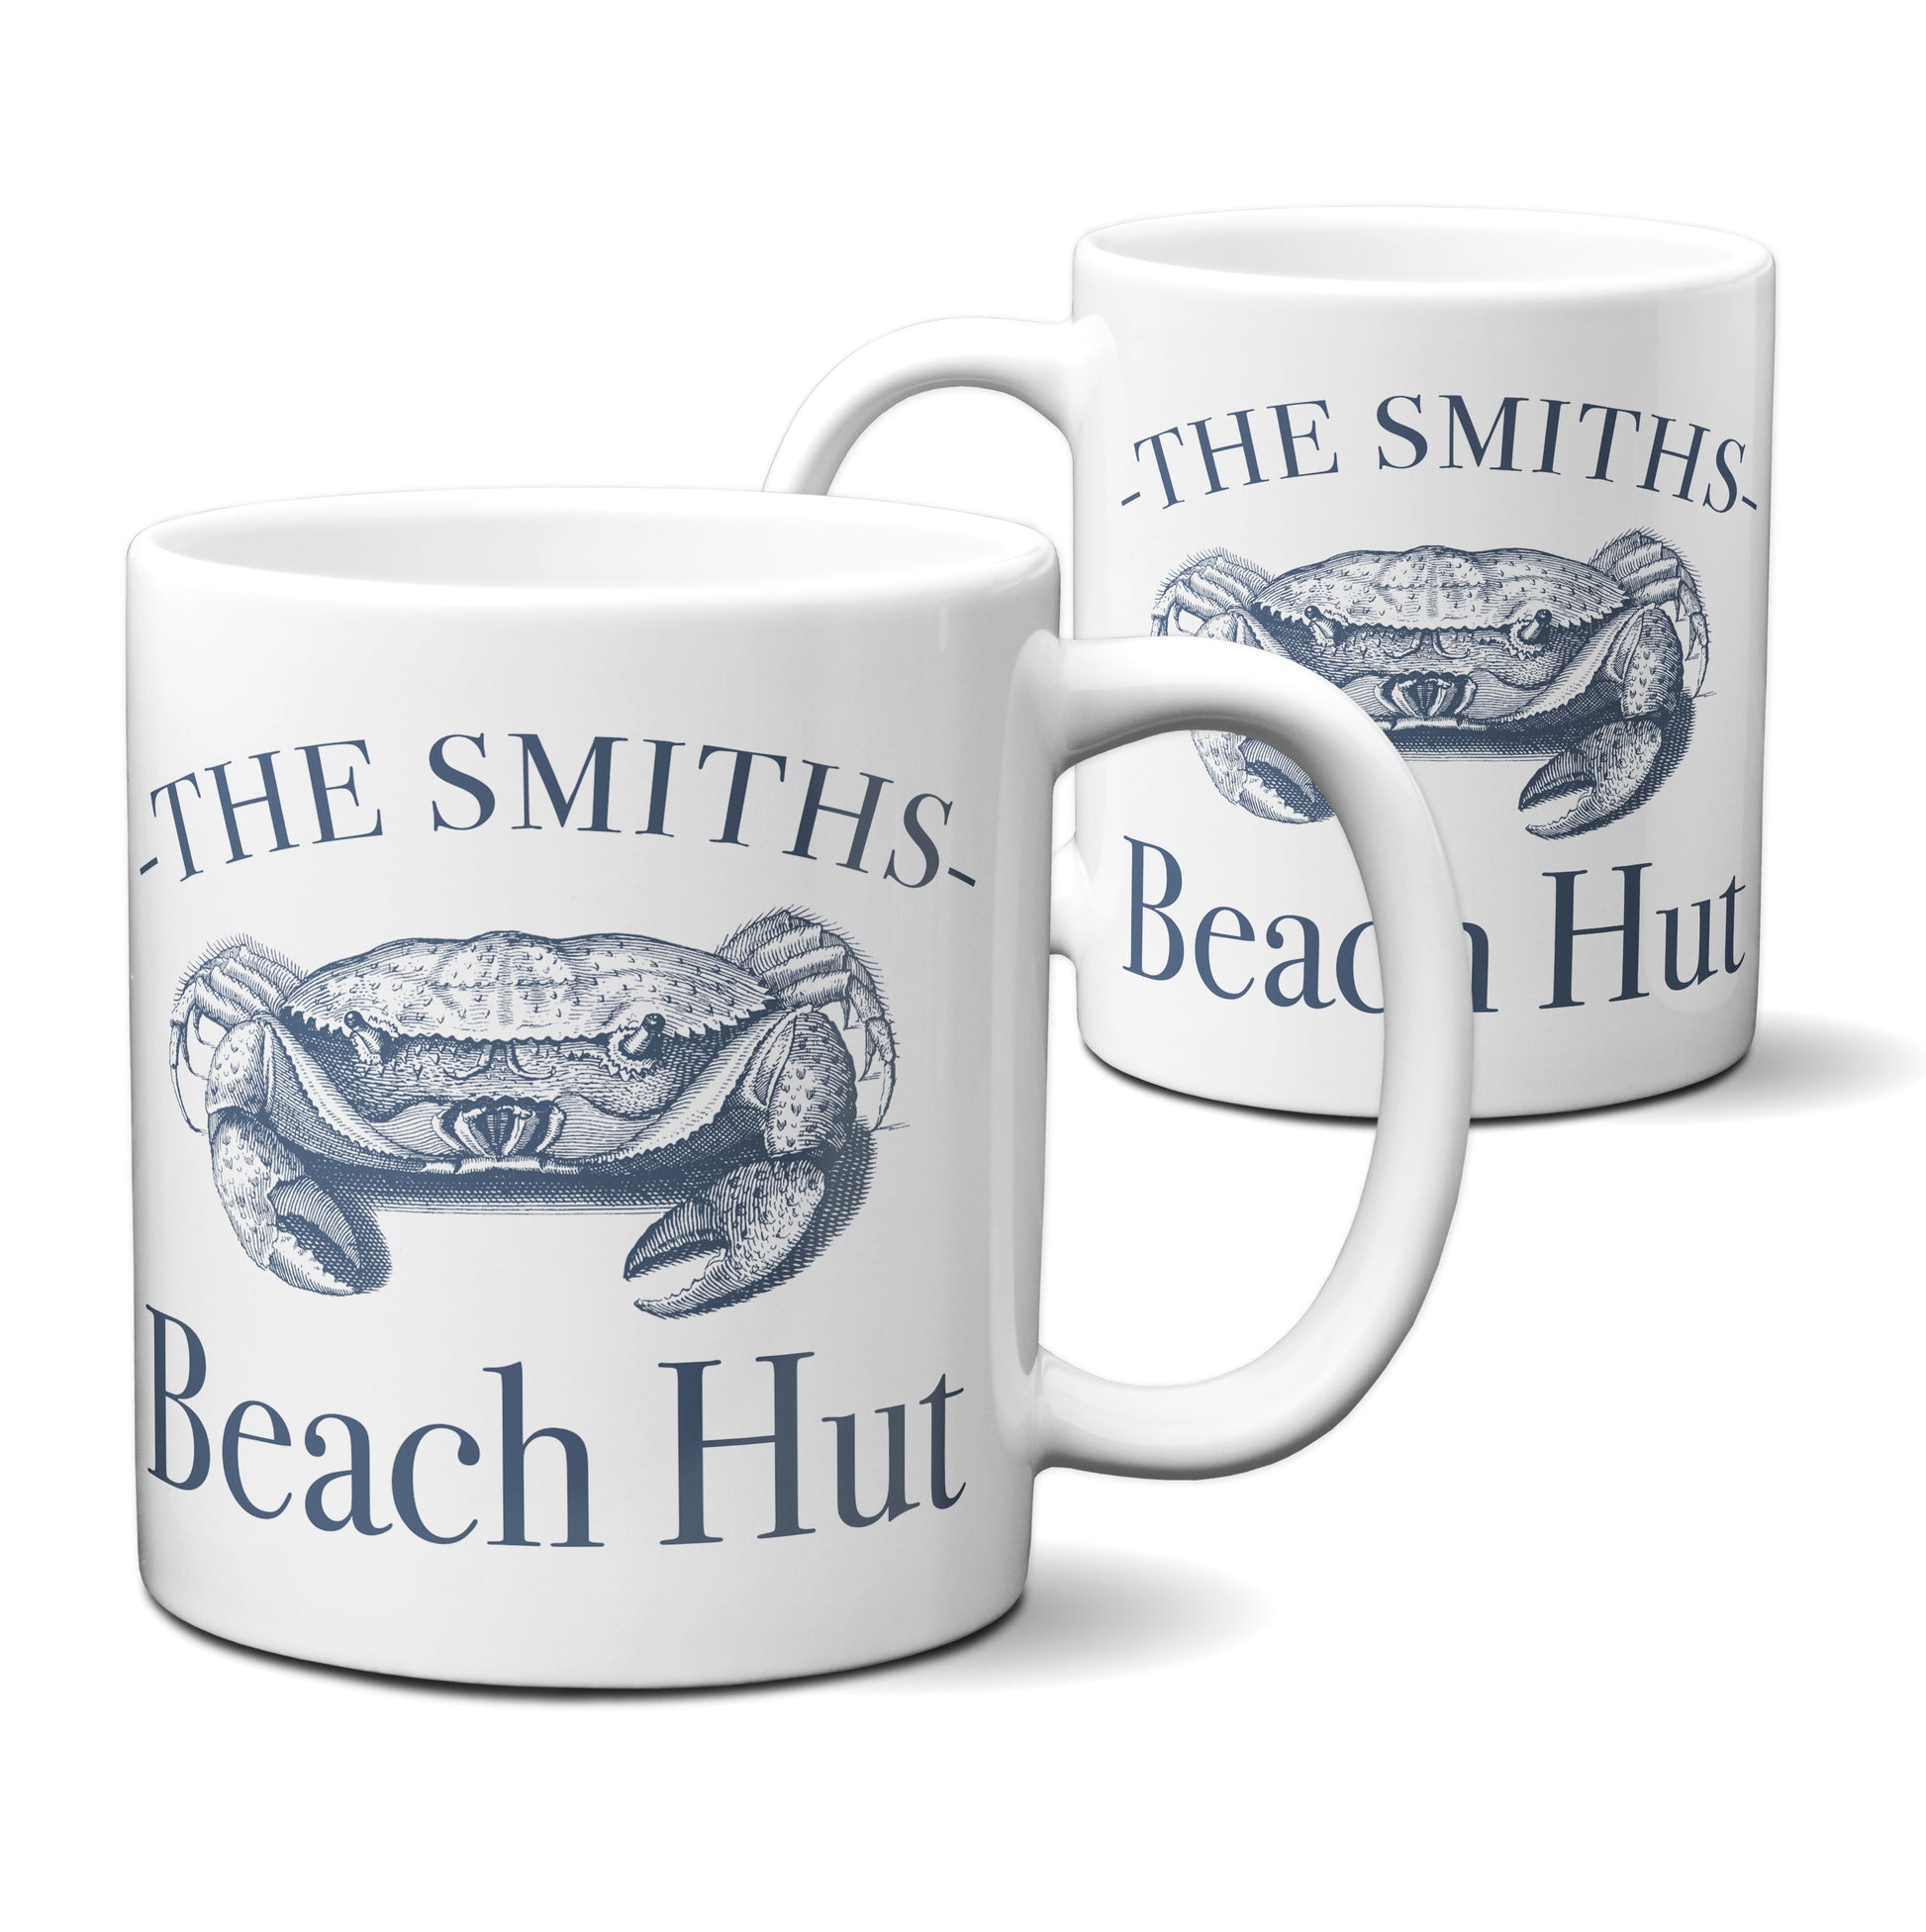 Personalised Beach hut mug gift vintage crab design